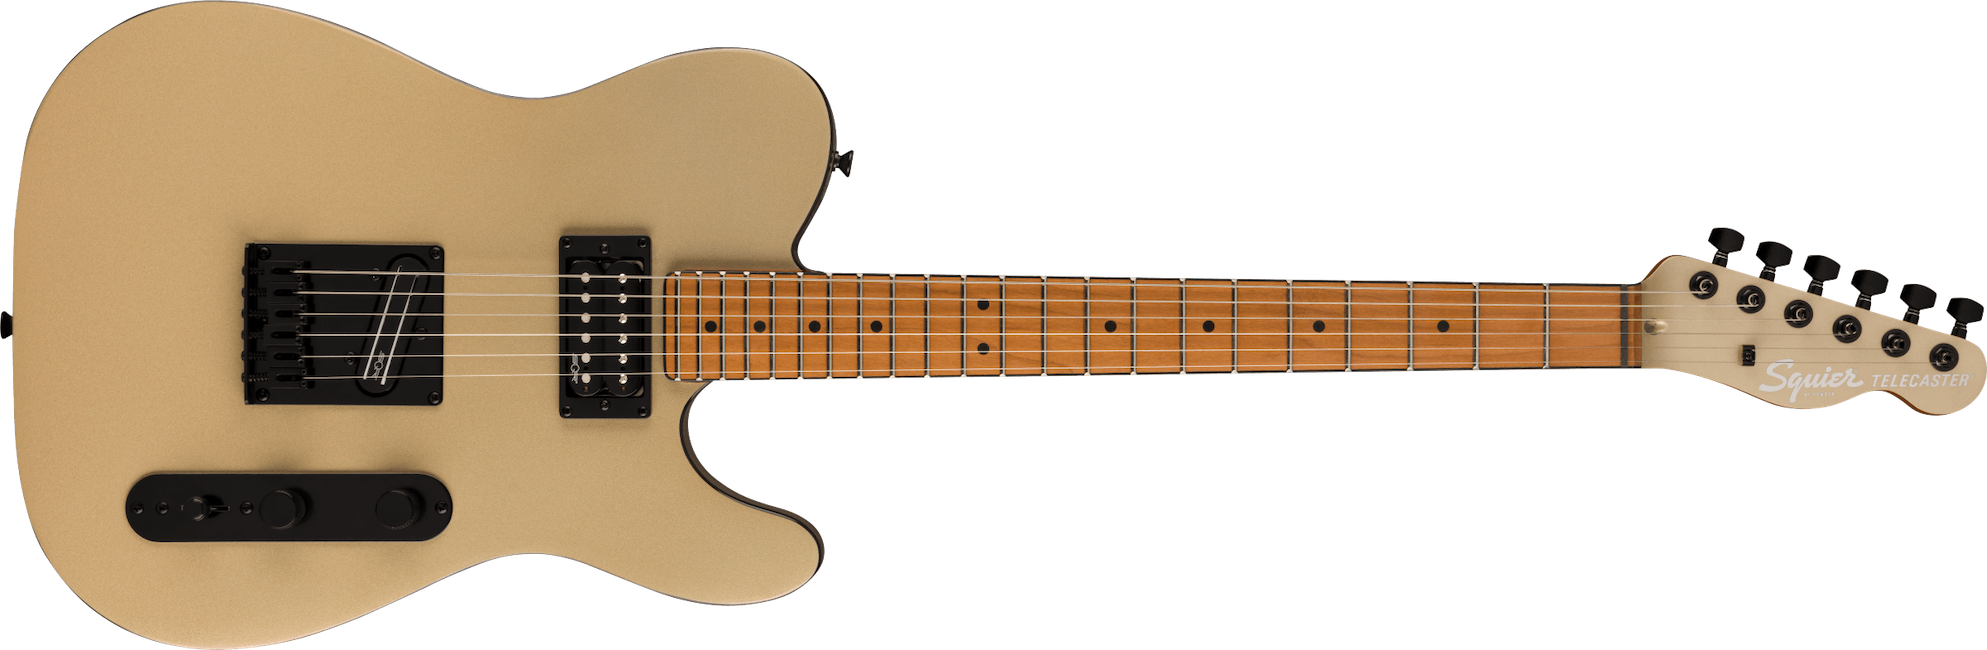 DEMO Fender Squier Contemporary Telecaster RH, Shoreline Gold